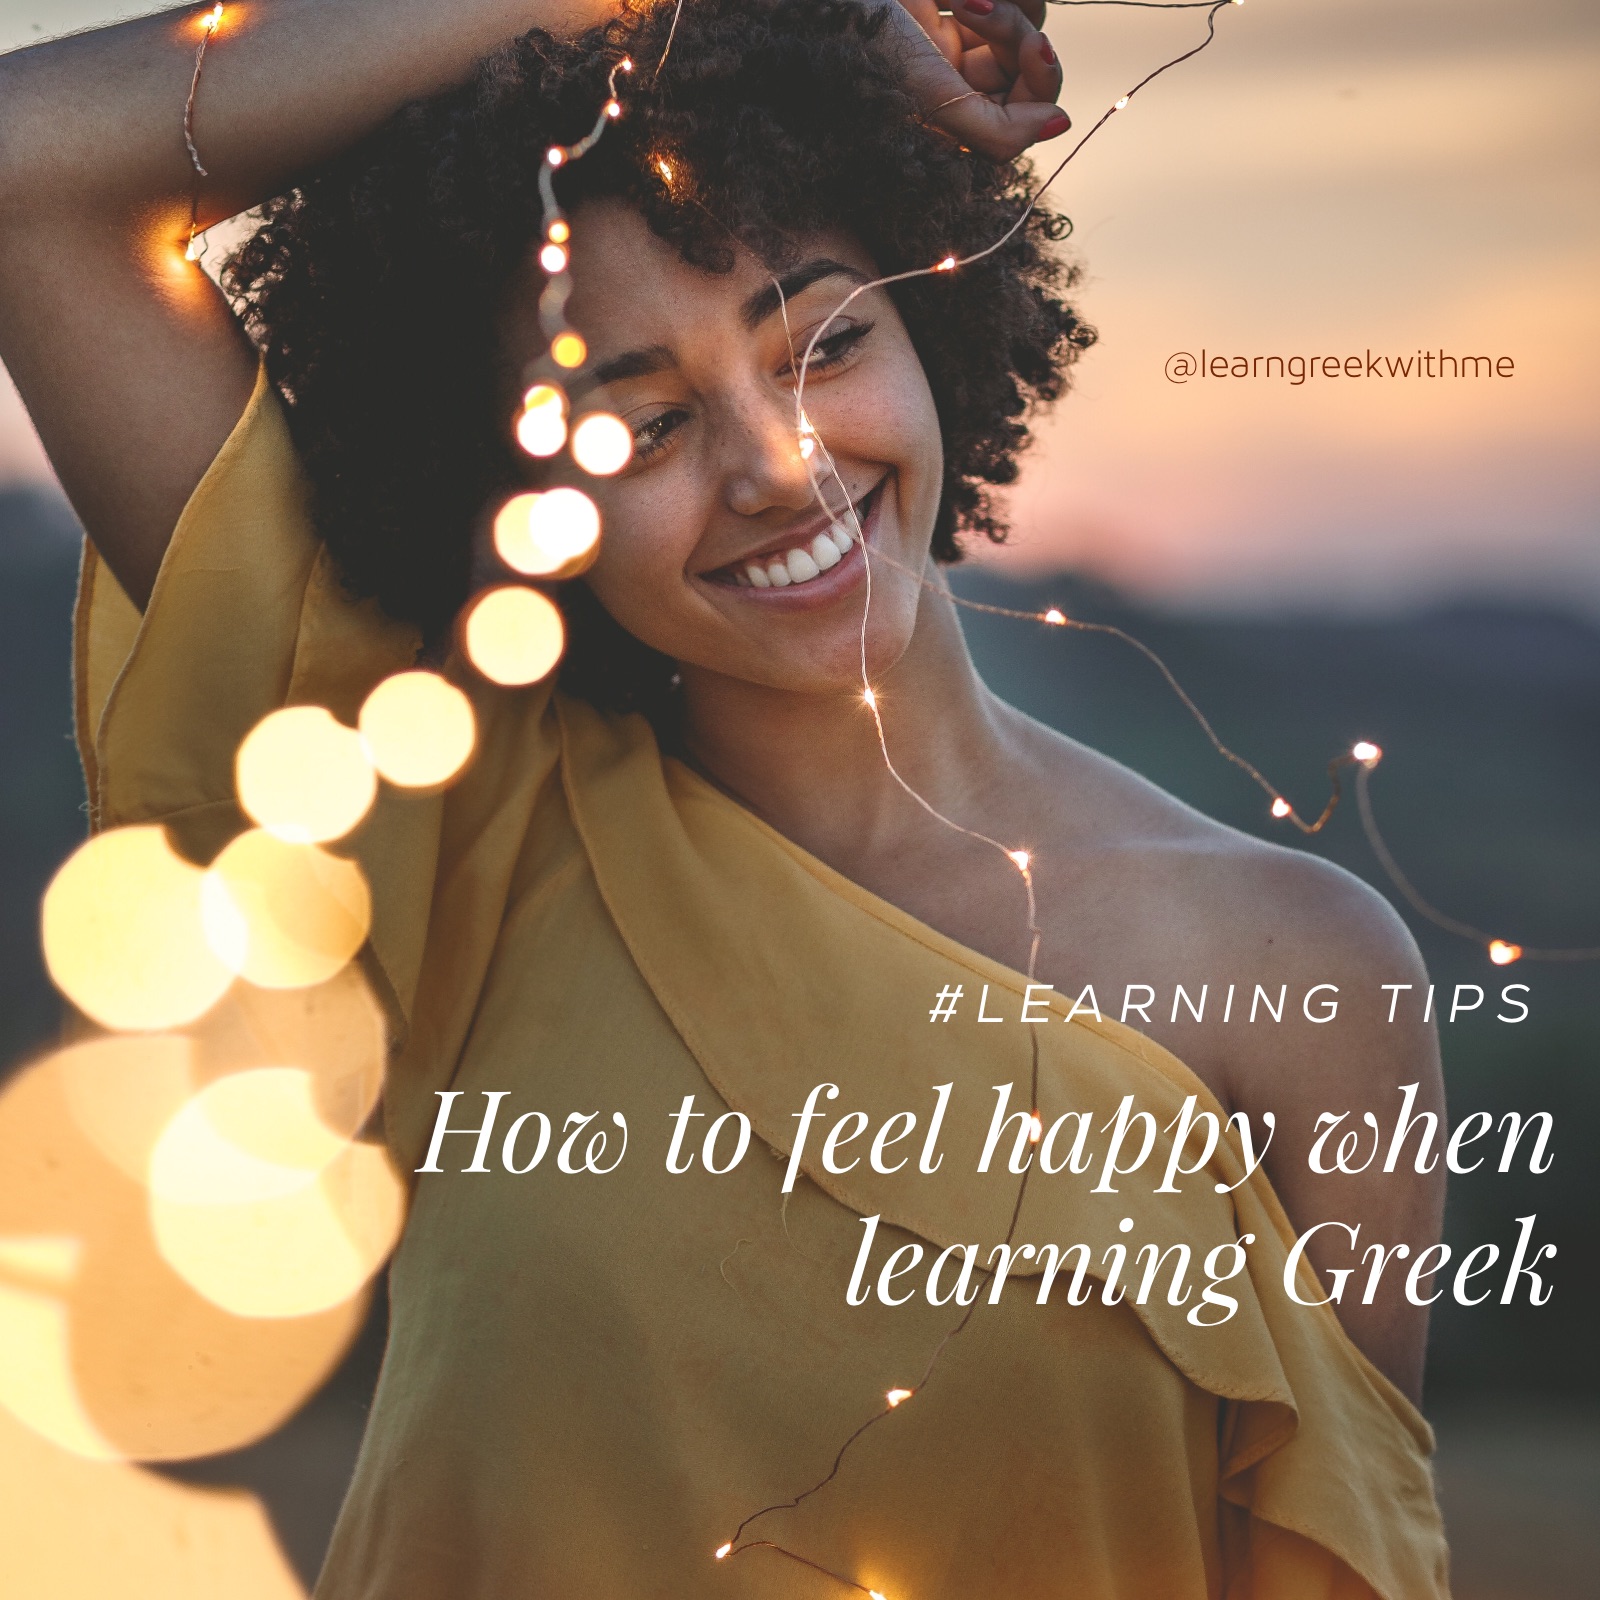 How to feel happy when learning Greek